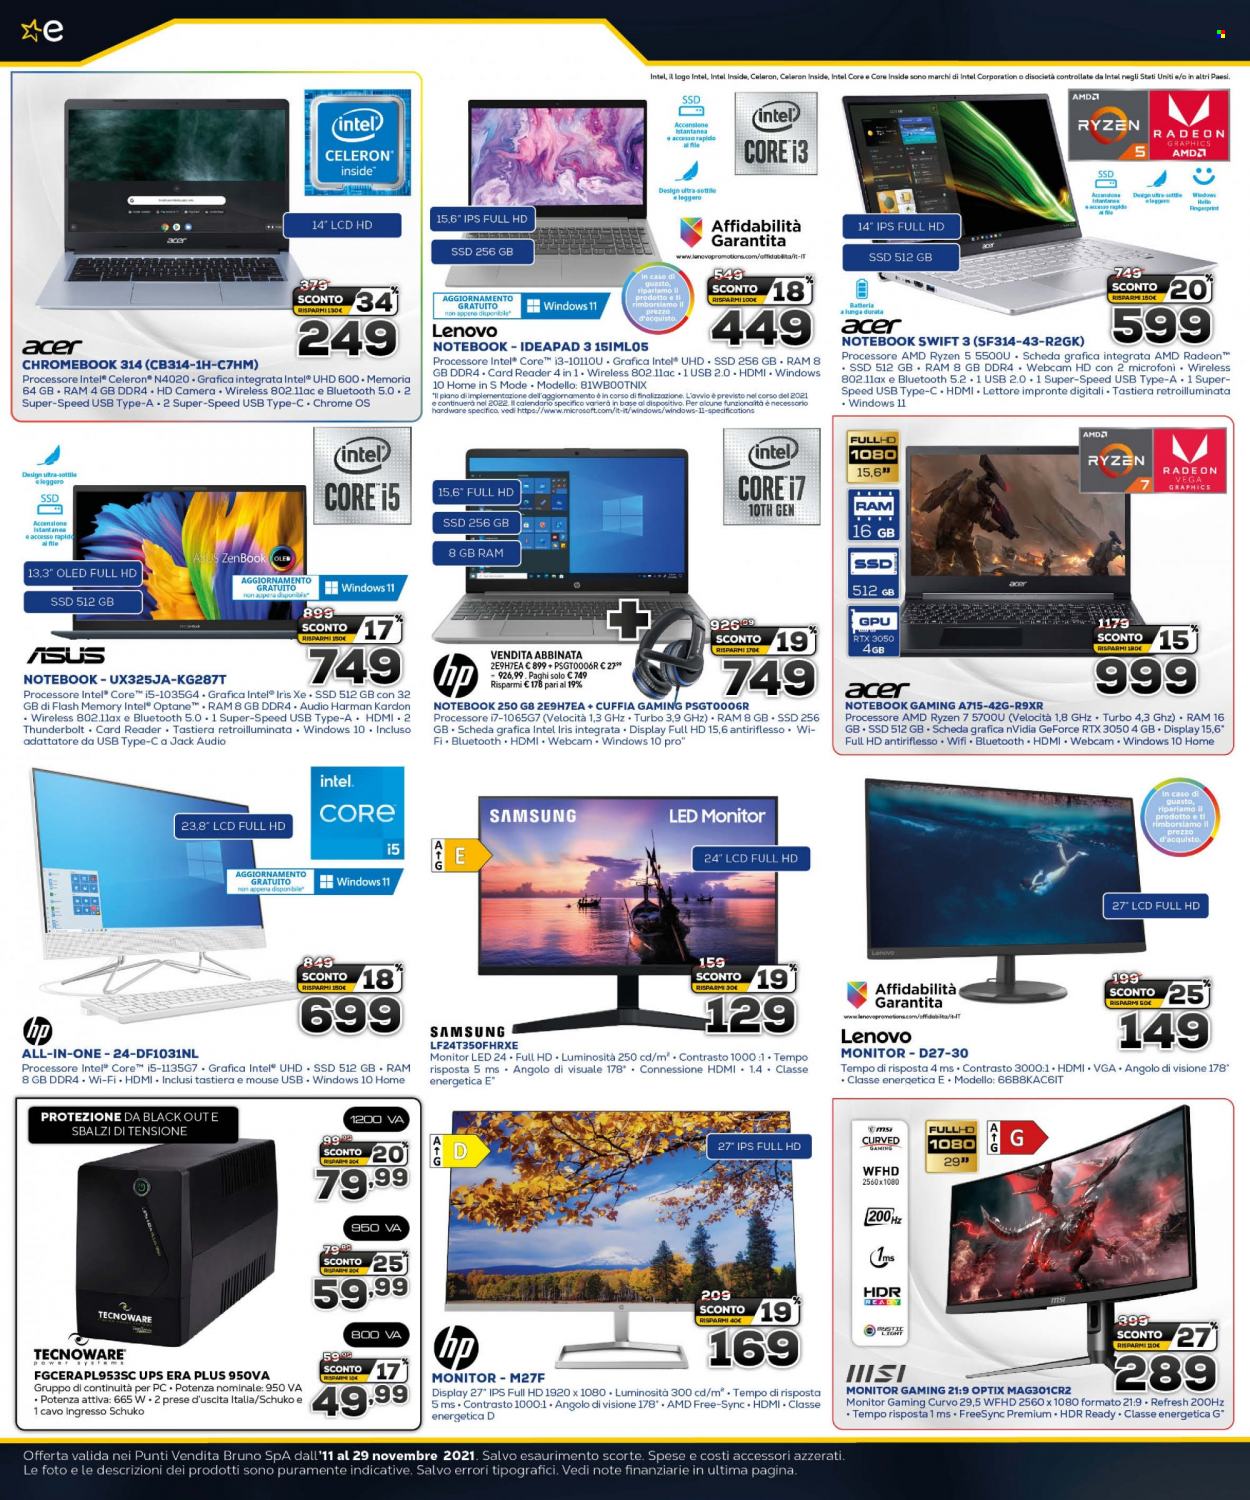 thumbnail - Volantino Euronics - 11/11/2021 - 29/11/2021 - Prodotti in offerta - Acer, Asus, Lenovo, Samsung, monitor gaming, monitor LED, monitor, notebook, notebook gaming, tastiera, nVidia, Intel, nVidia GeForce, AMD Radeon, cuffia. Pagina 14.